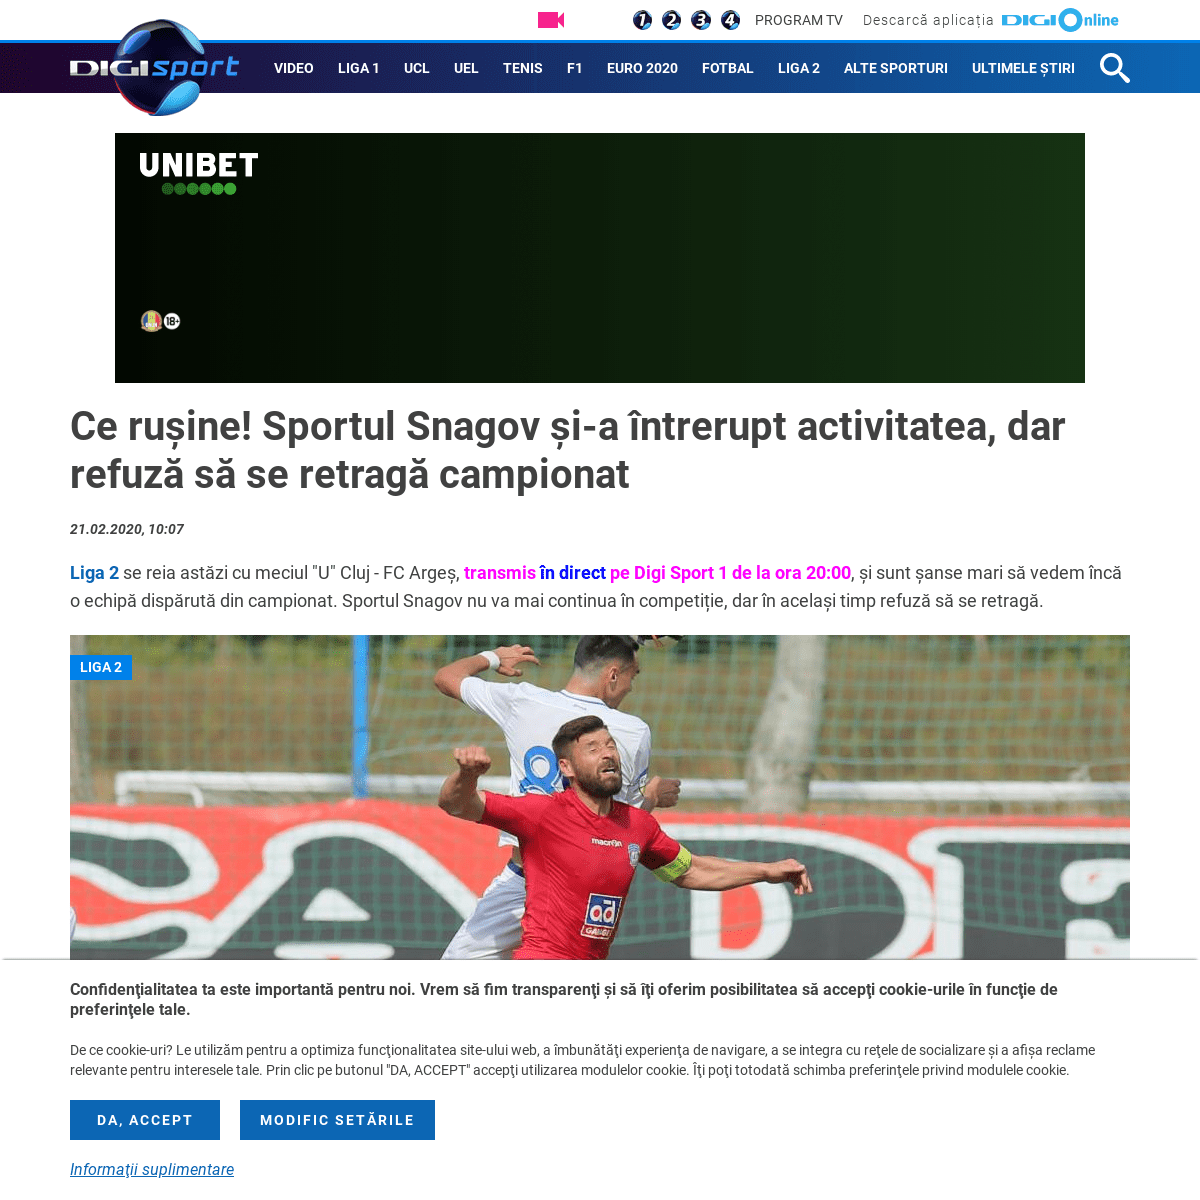 A complete backup of www.digisport.ro/fotbal/liga-2/ce-rusine-sportul-snagov-si-a-intrerupt-activitatea-dar-refuza-sa-se-retraga